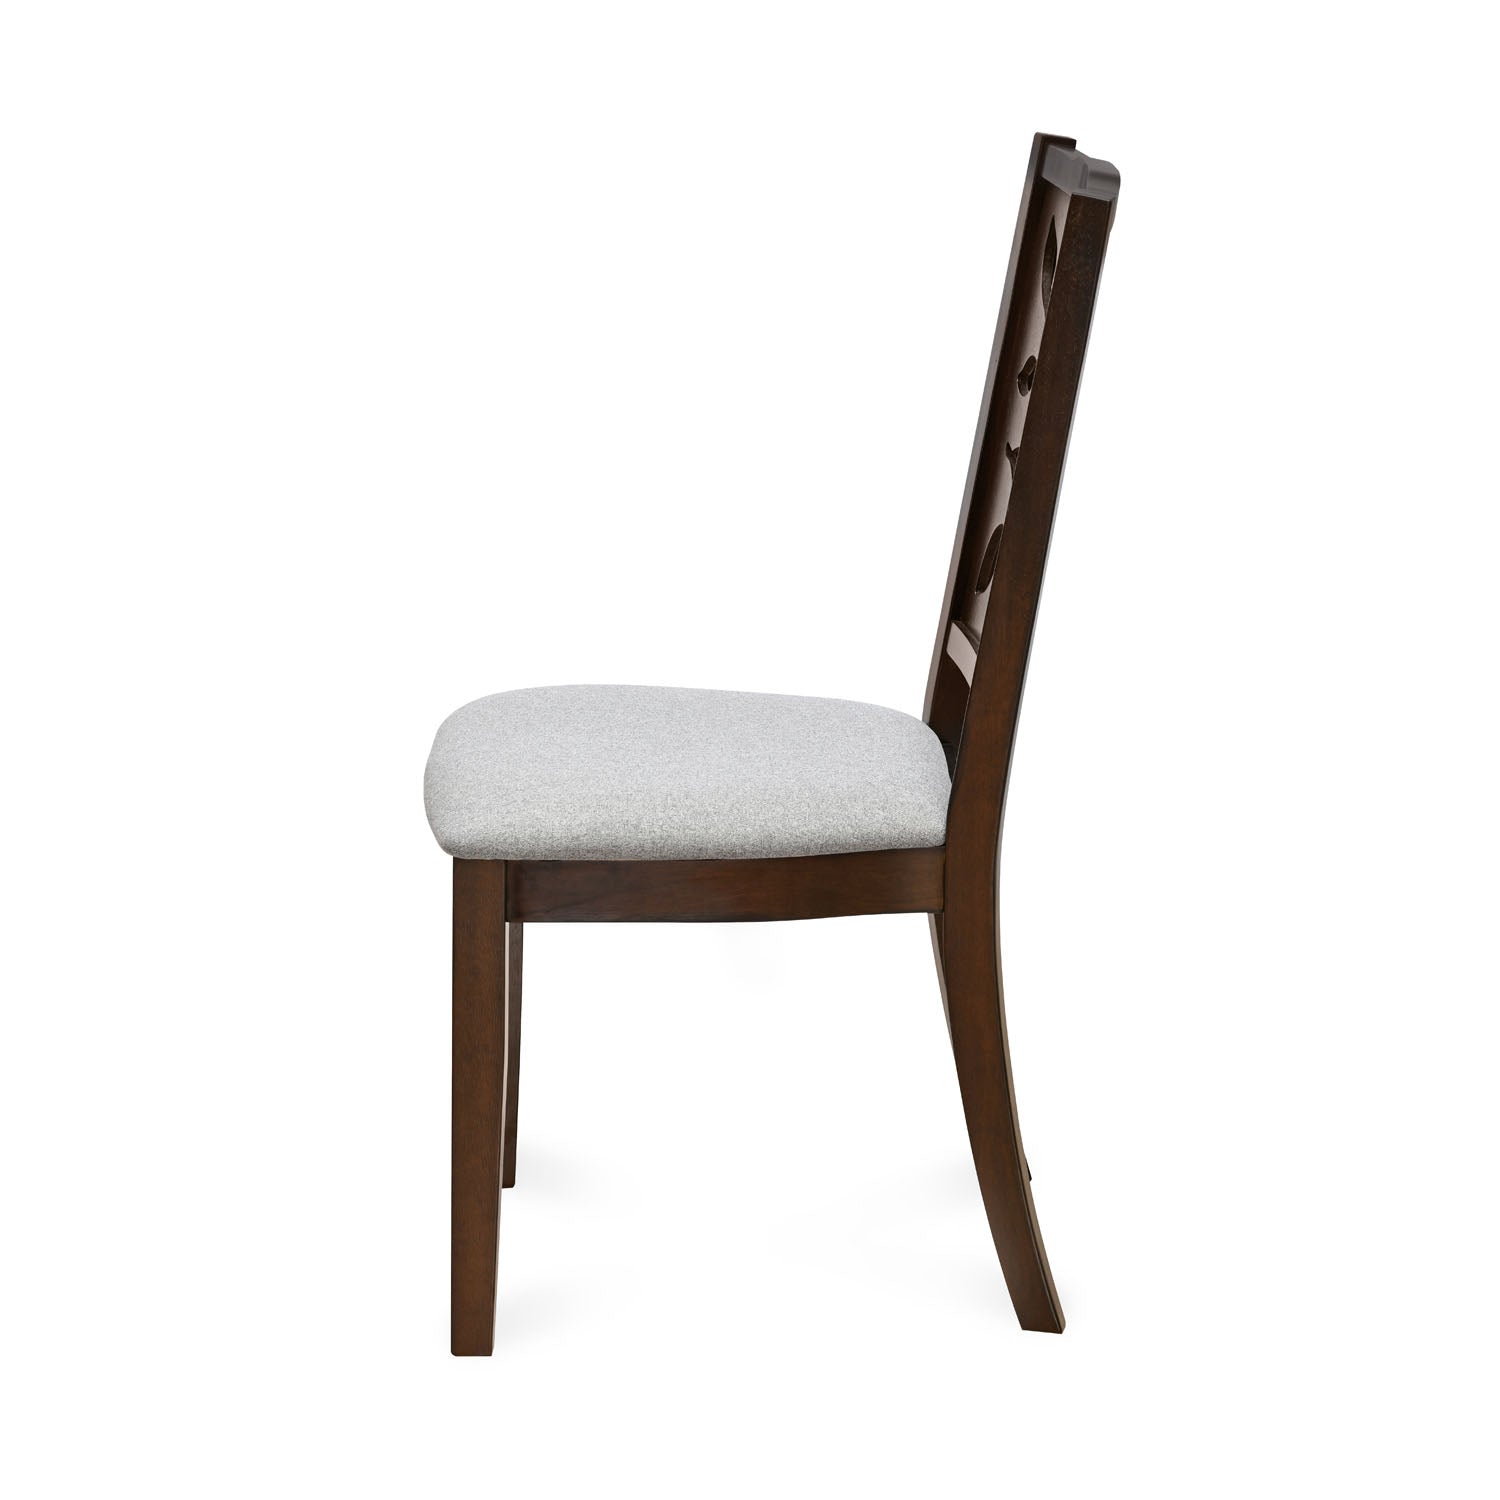 Forester Dining Chair (Dark Walnut)